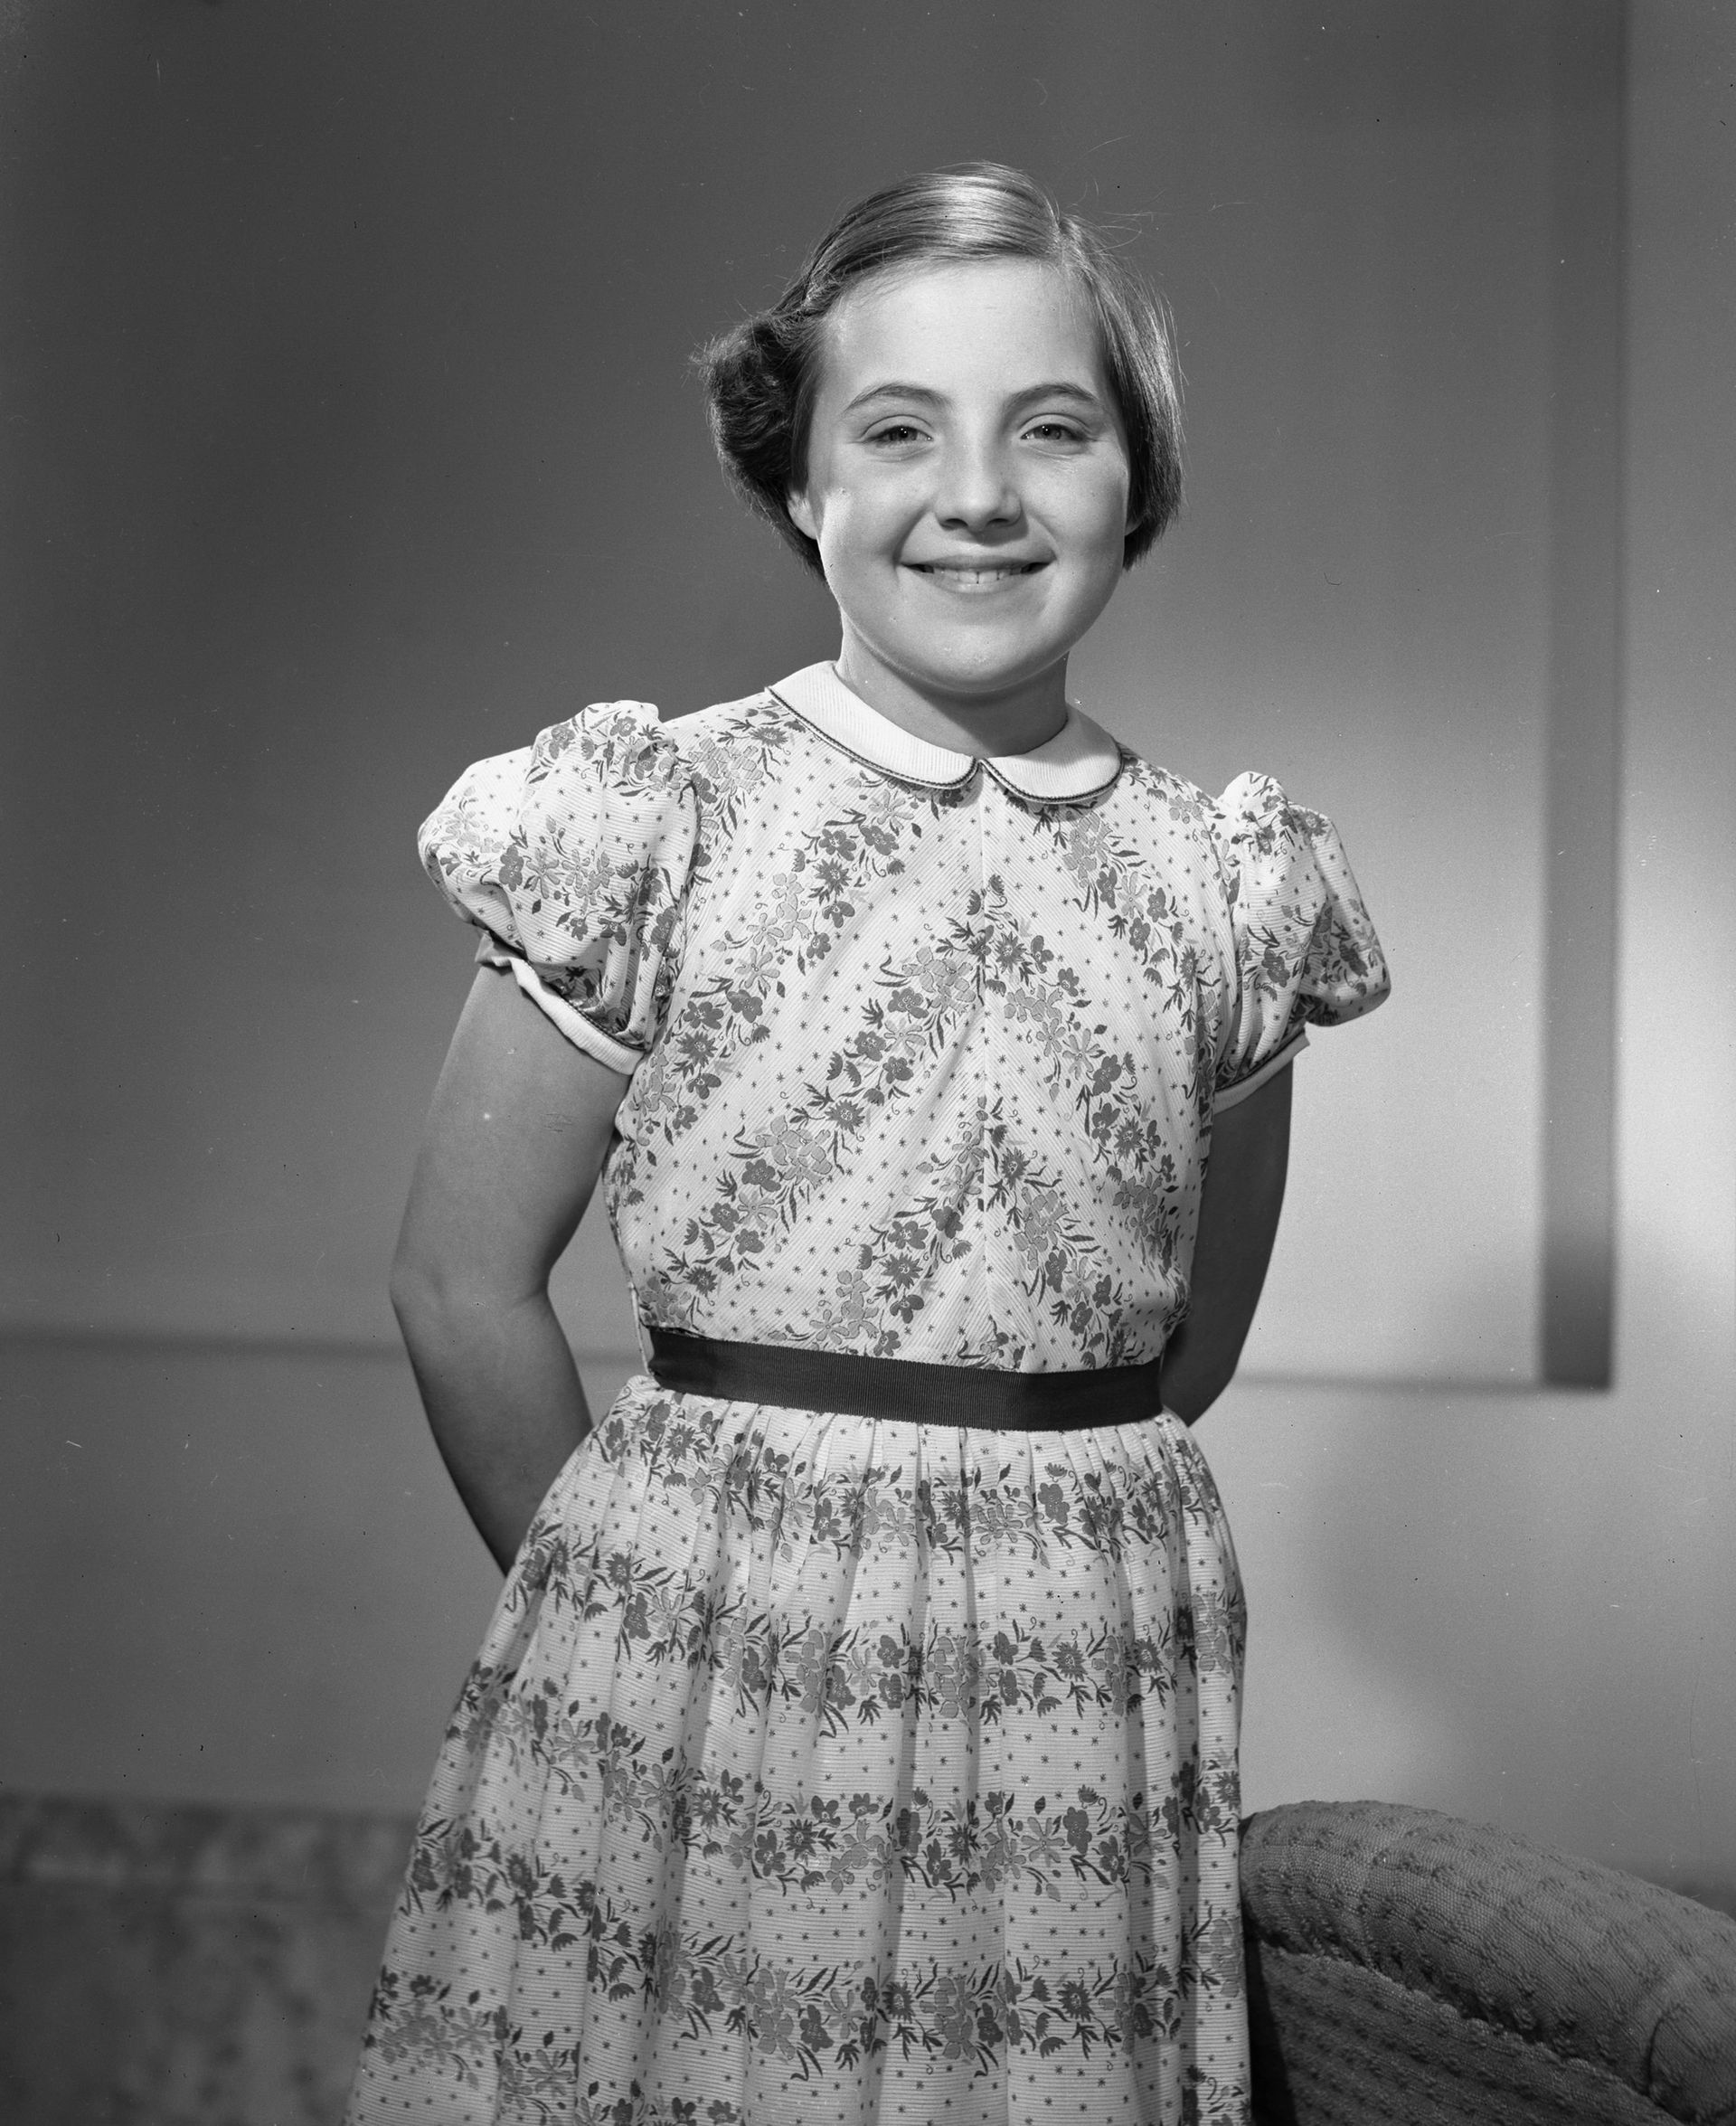 1954: Margriet op Paleis Soestdijk. Hier is de prinses elf jaar oud.